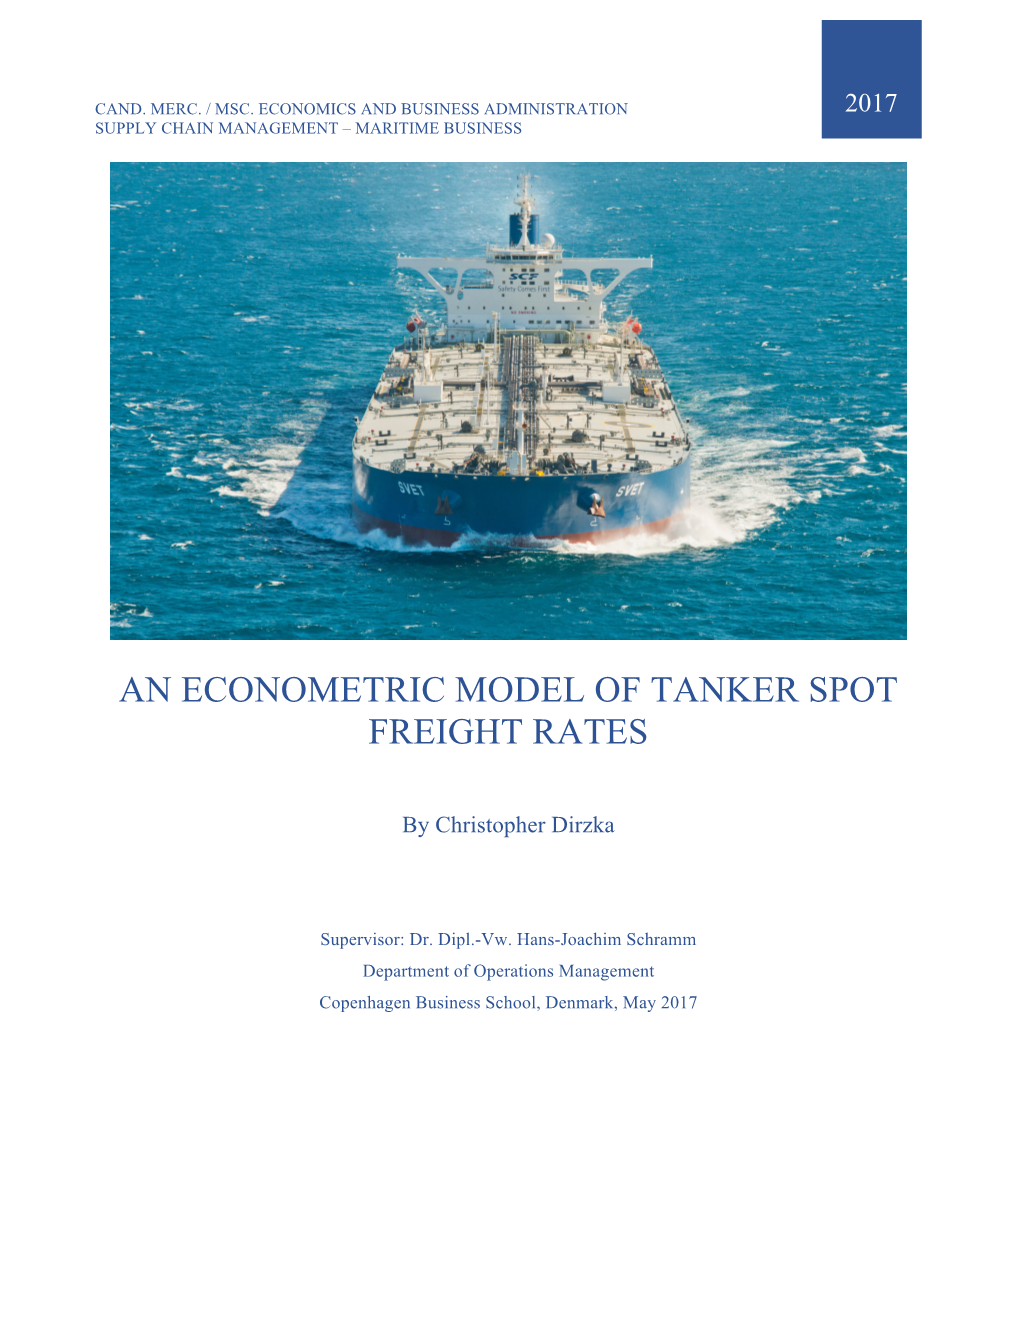 An Econometric Model of Tanker Spot Freight Rates V4